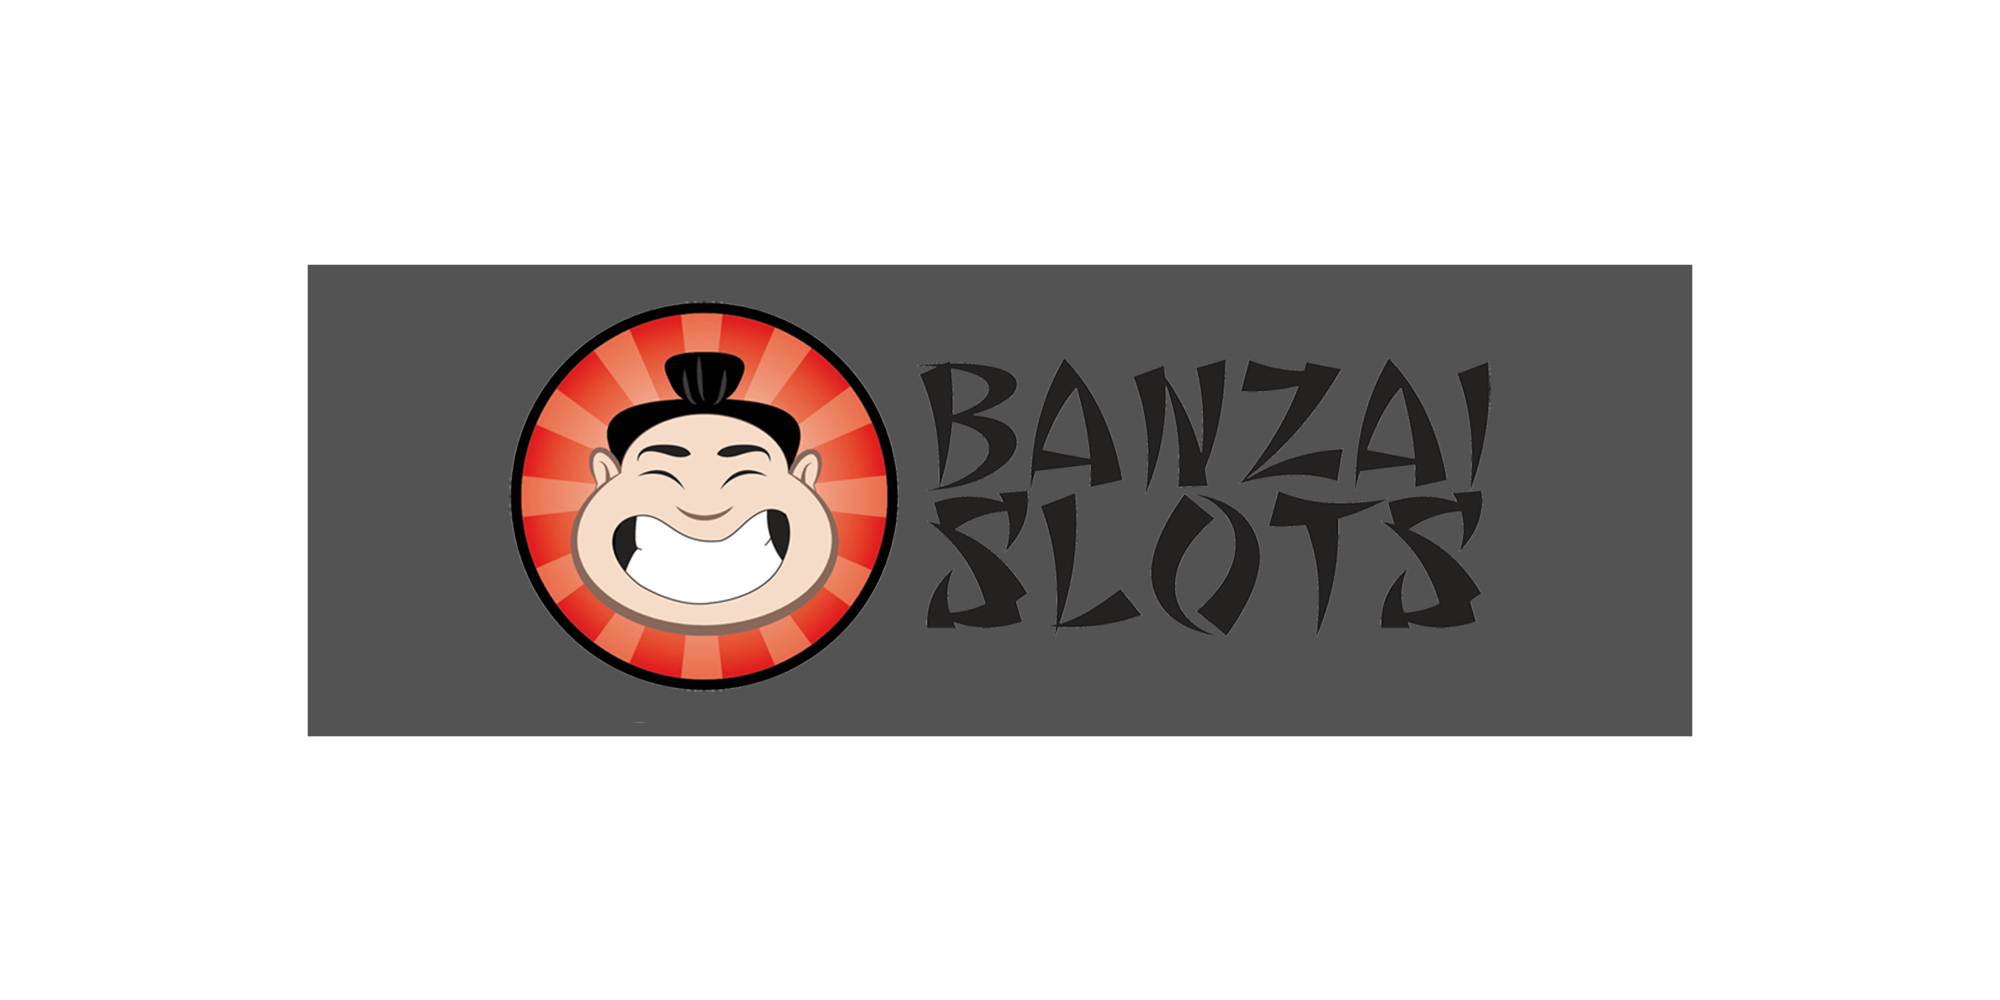 meilleur casino en ligne - Banzai slots